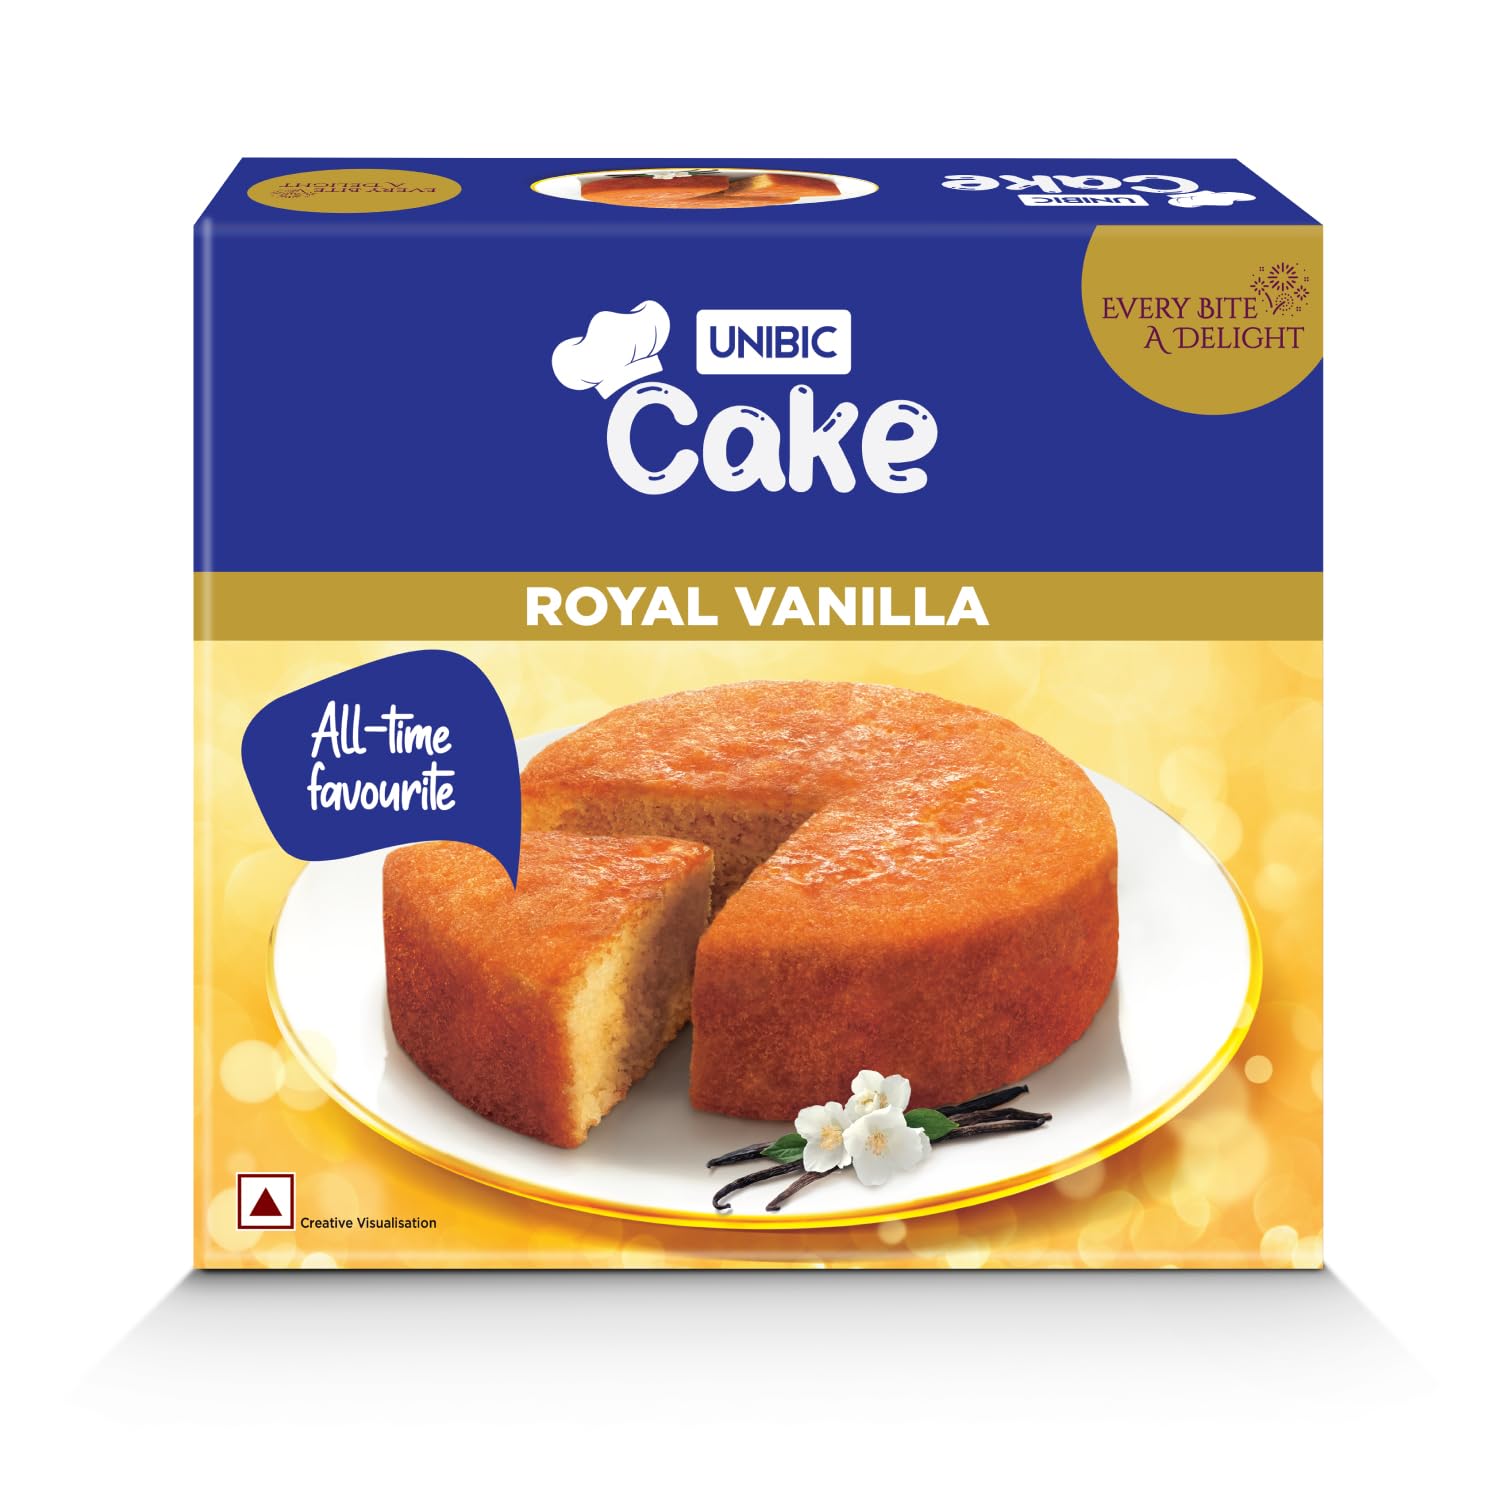 Unibic Cake - Royal Vanilla